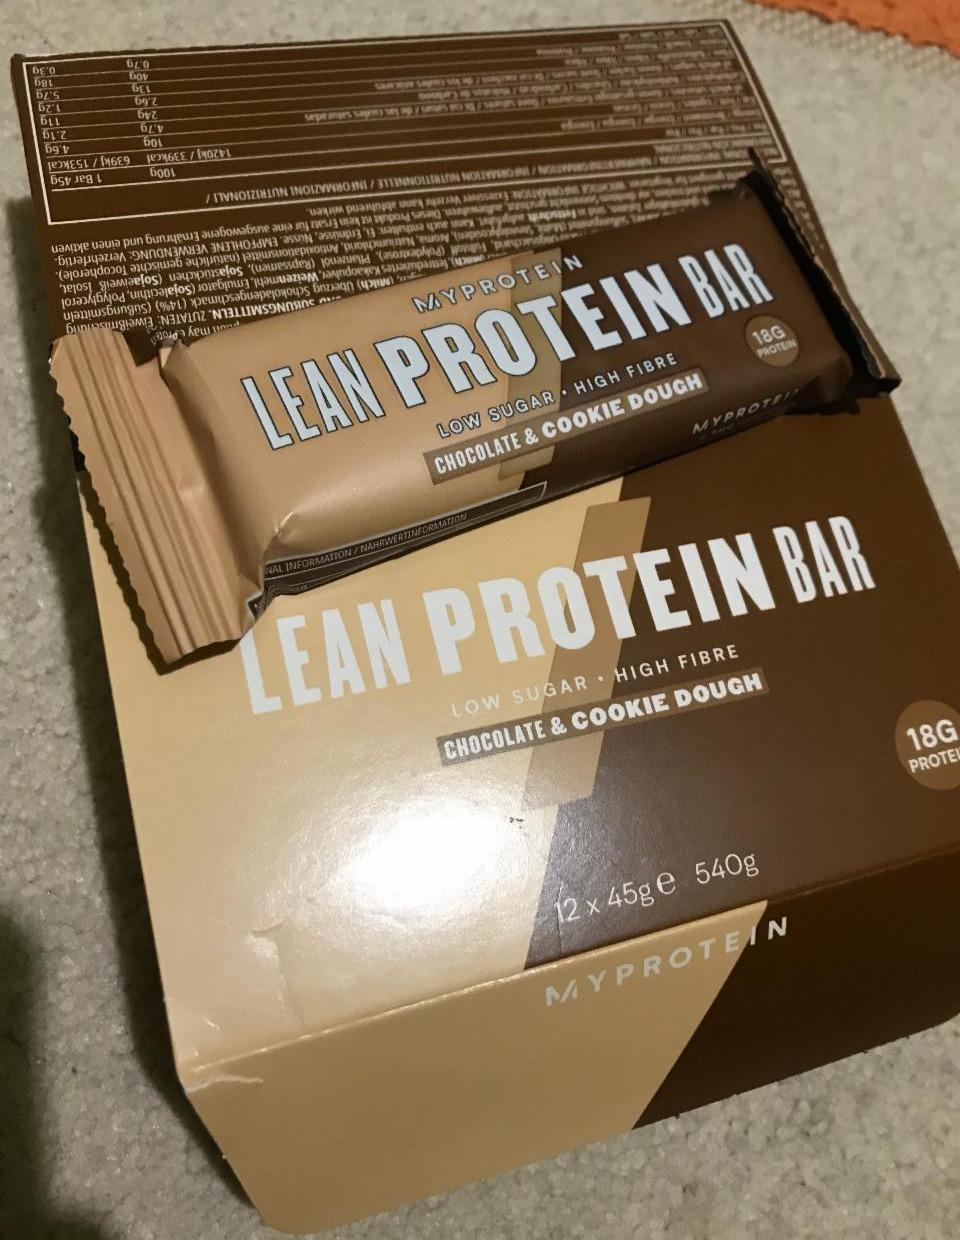 Fotografie - Lean protein bar Chocolate & cookie dough